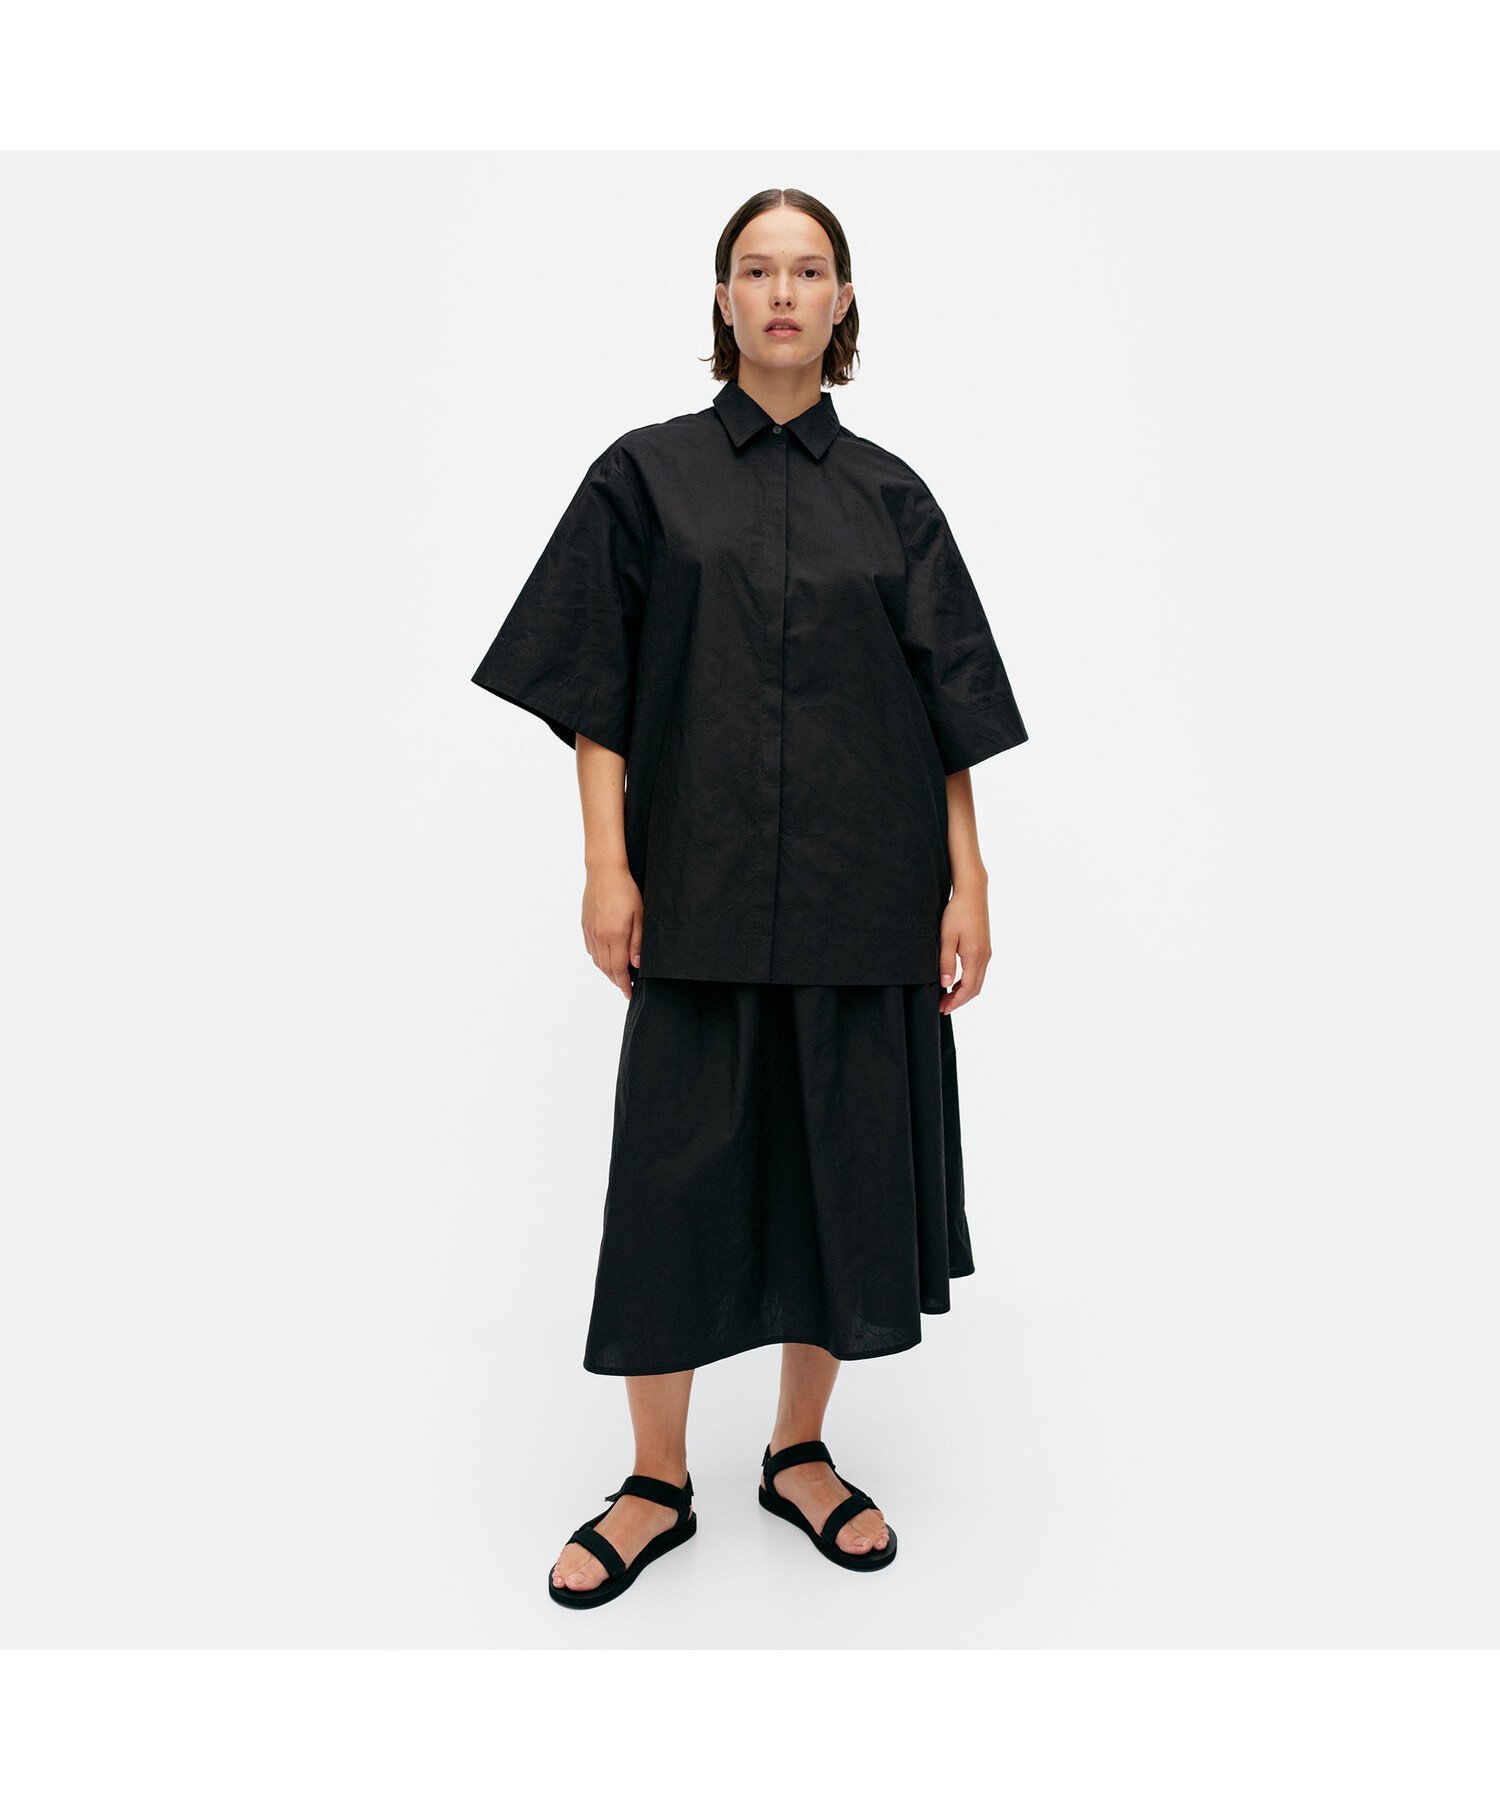 Marimekko Meara Mini Unikko シャツ マリメッコ トップス シャツ・ブラウス ブラック【送料無料】